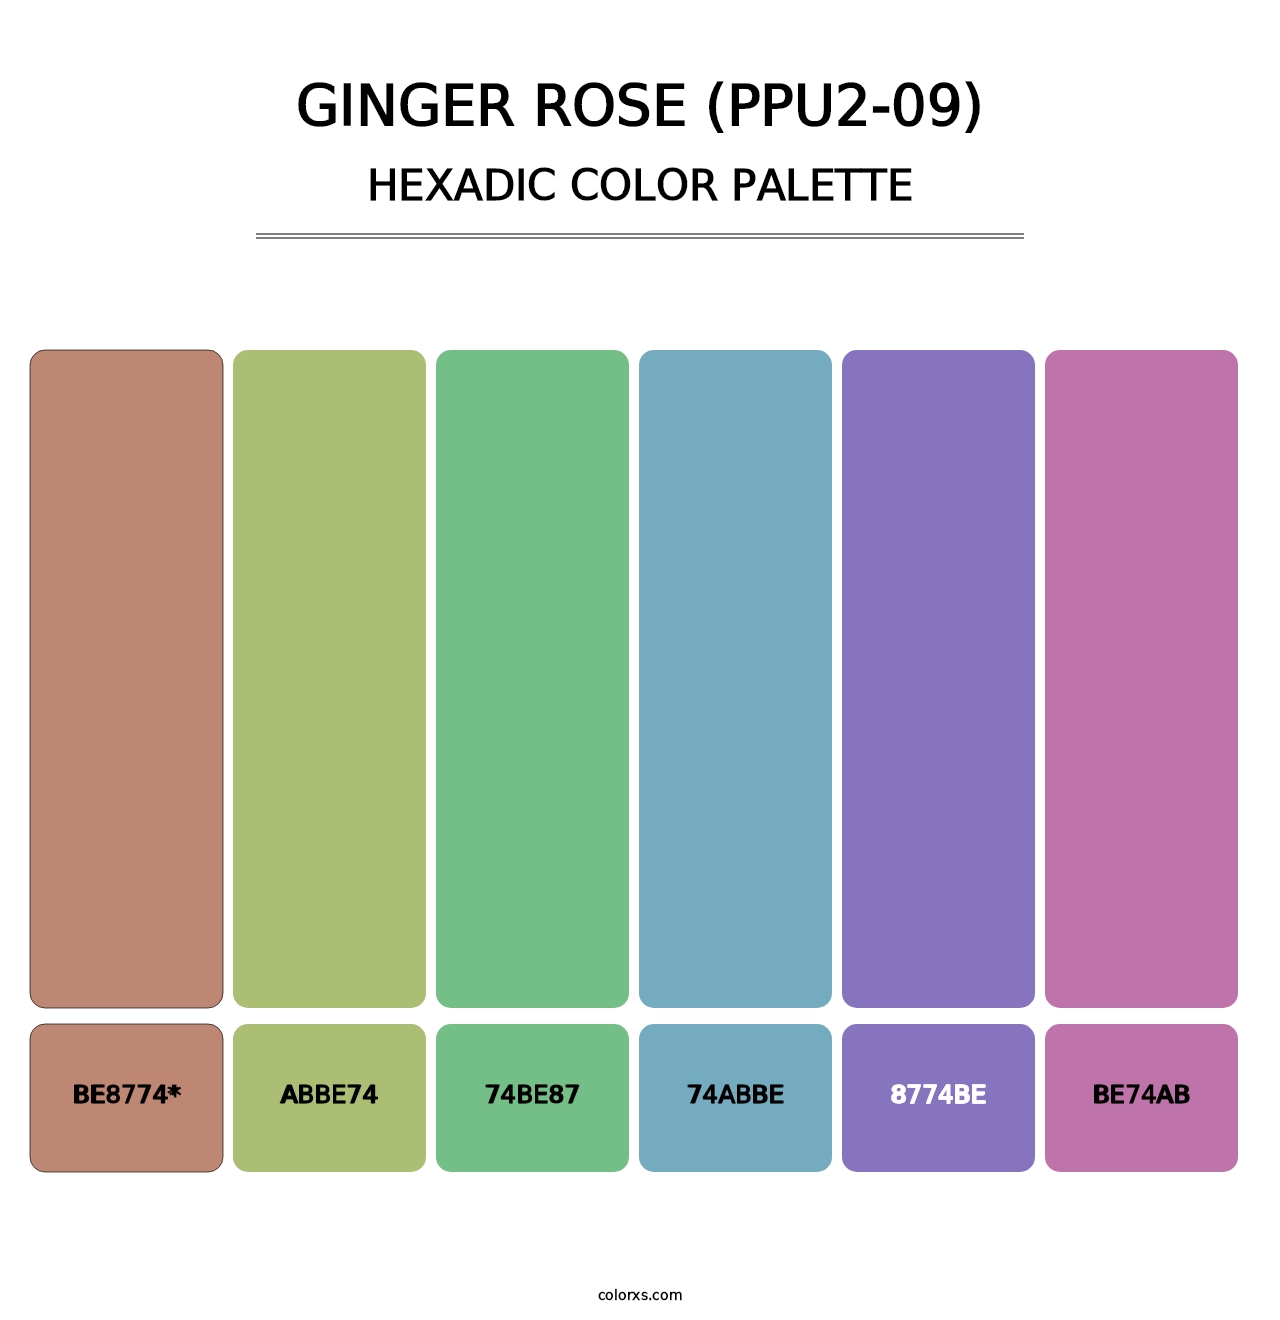 Ginger Rose (PPU2-09) - Hexadic Color Palette